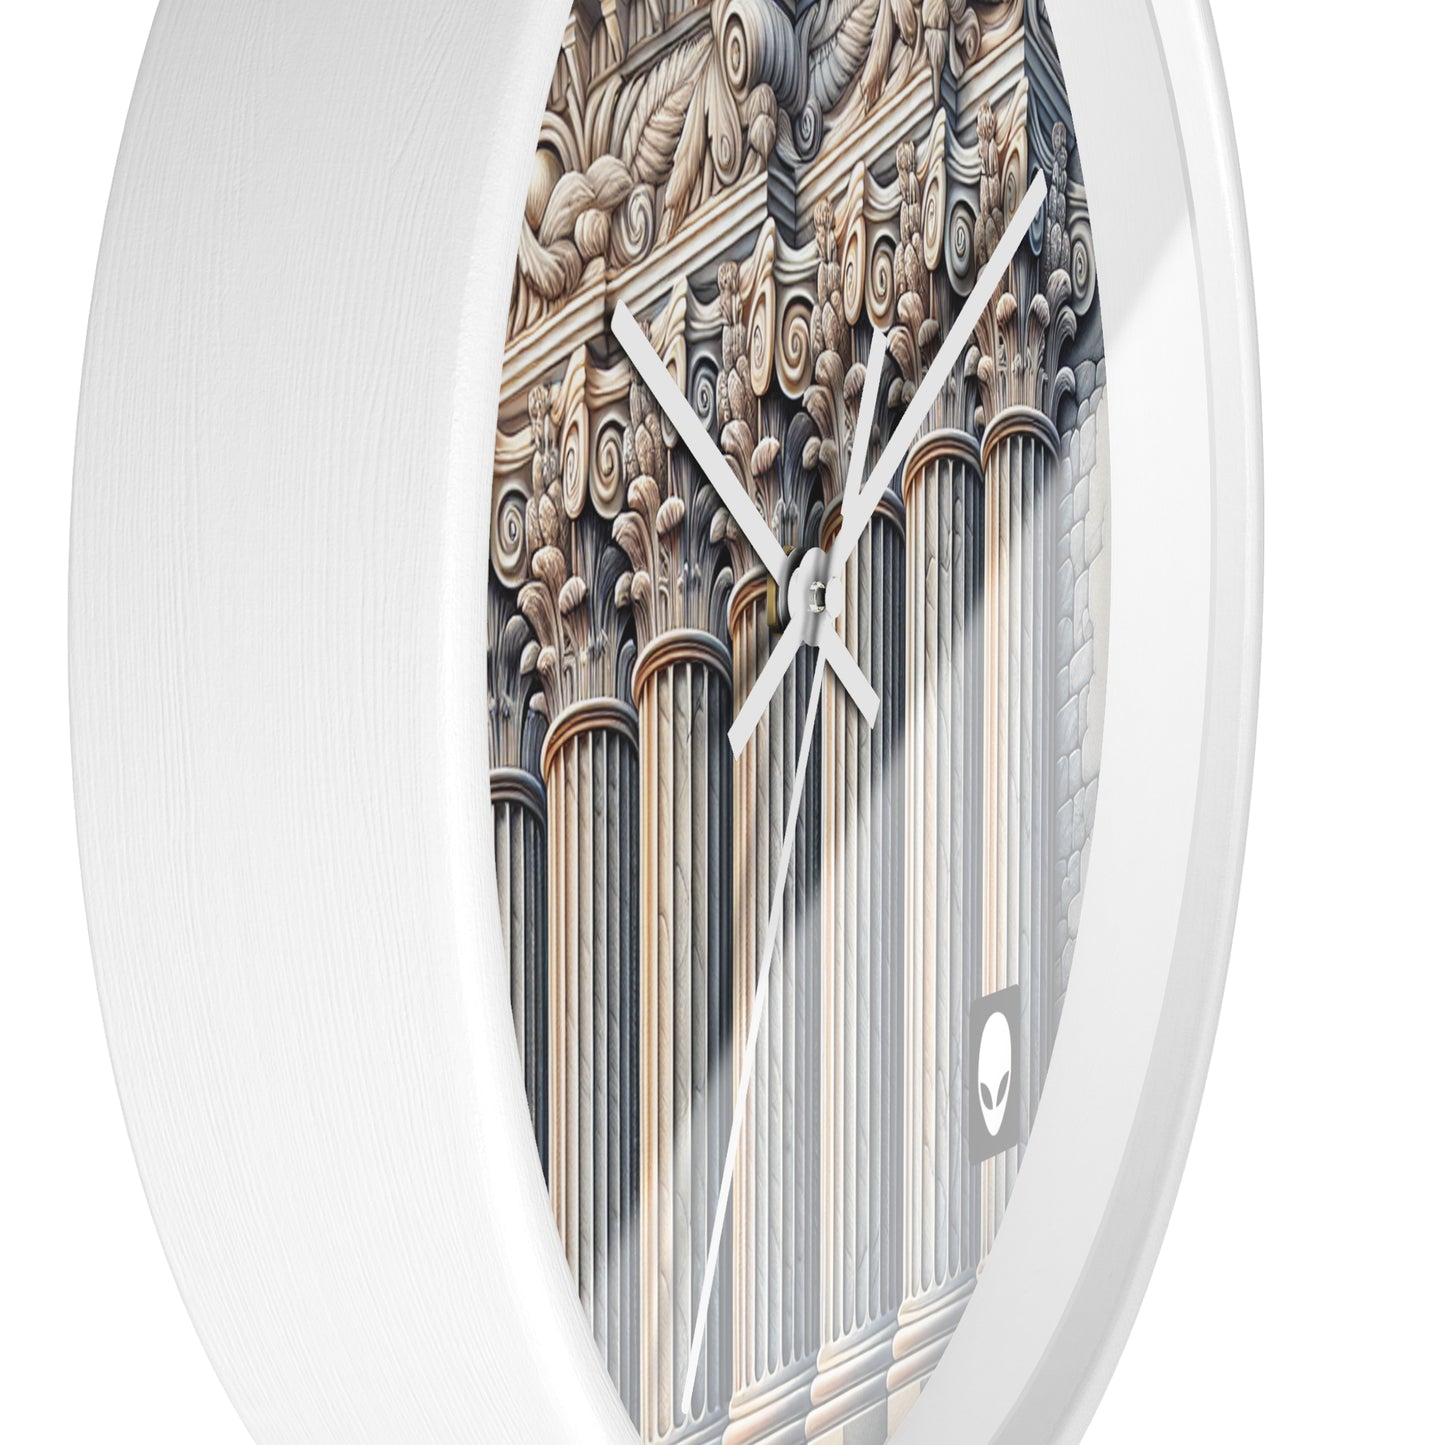 "Columnas de pared 3D: una obra de arte arquitectónica": el reloj de pared alienígena estilo trompe-l'oeil